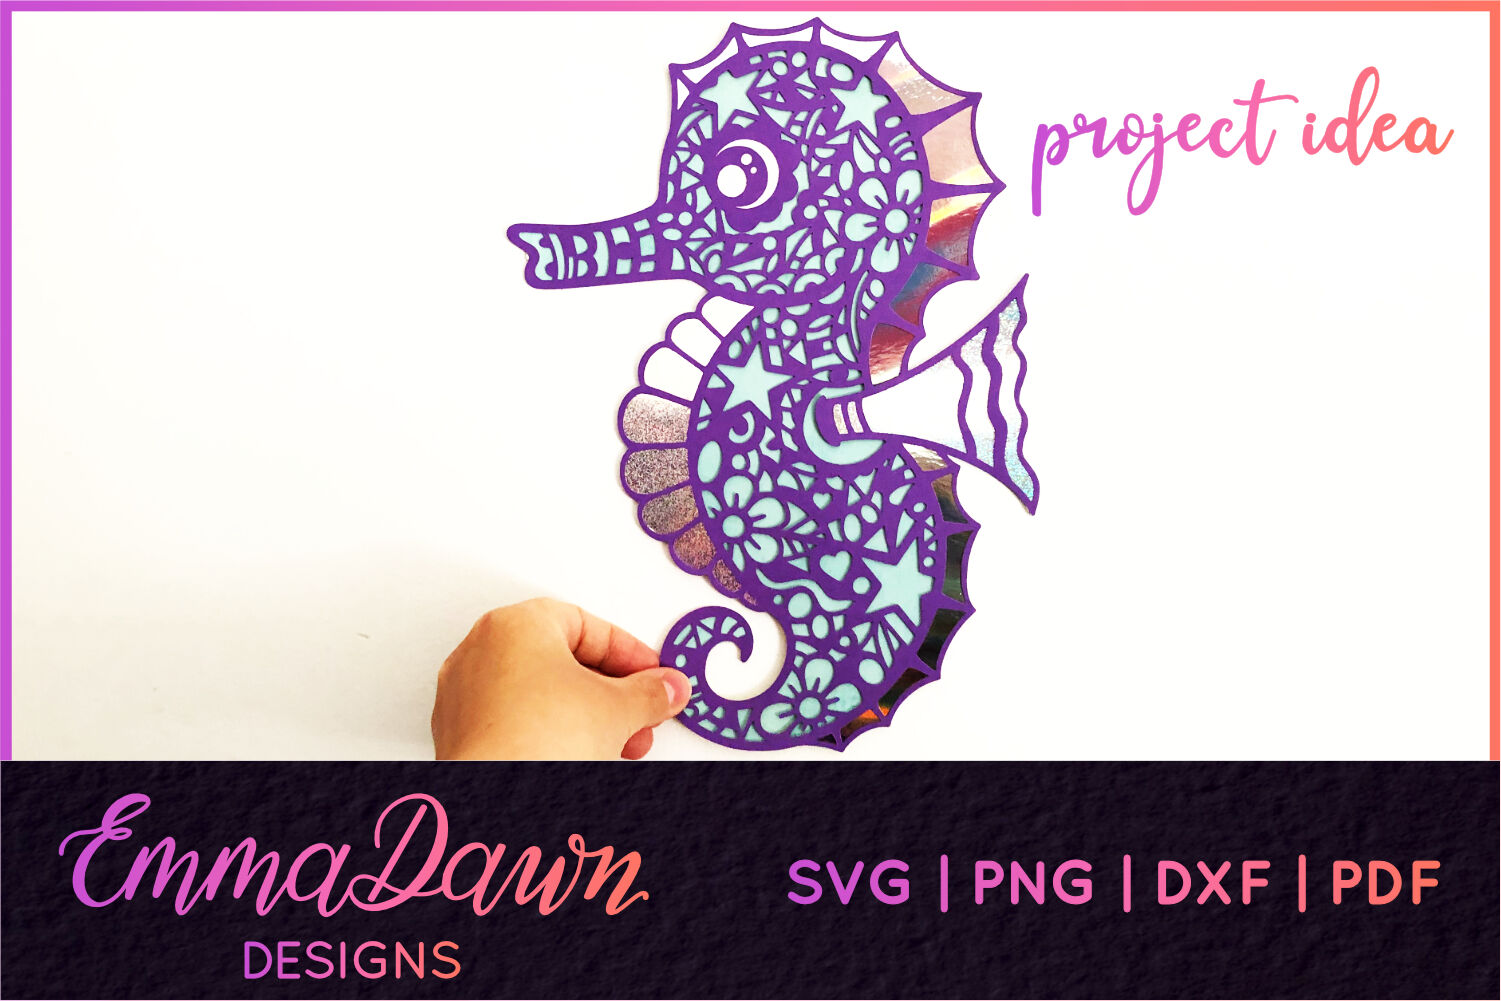 Download Sandy The Seahorse Mandala Zentangle Design Svg By Emma Dawn Designs Thehungryjpeg Com